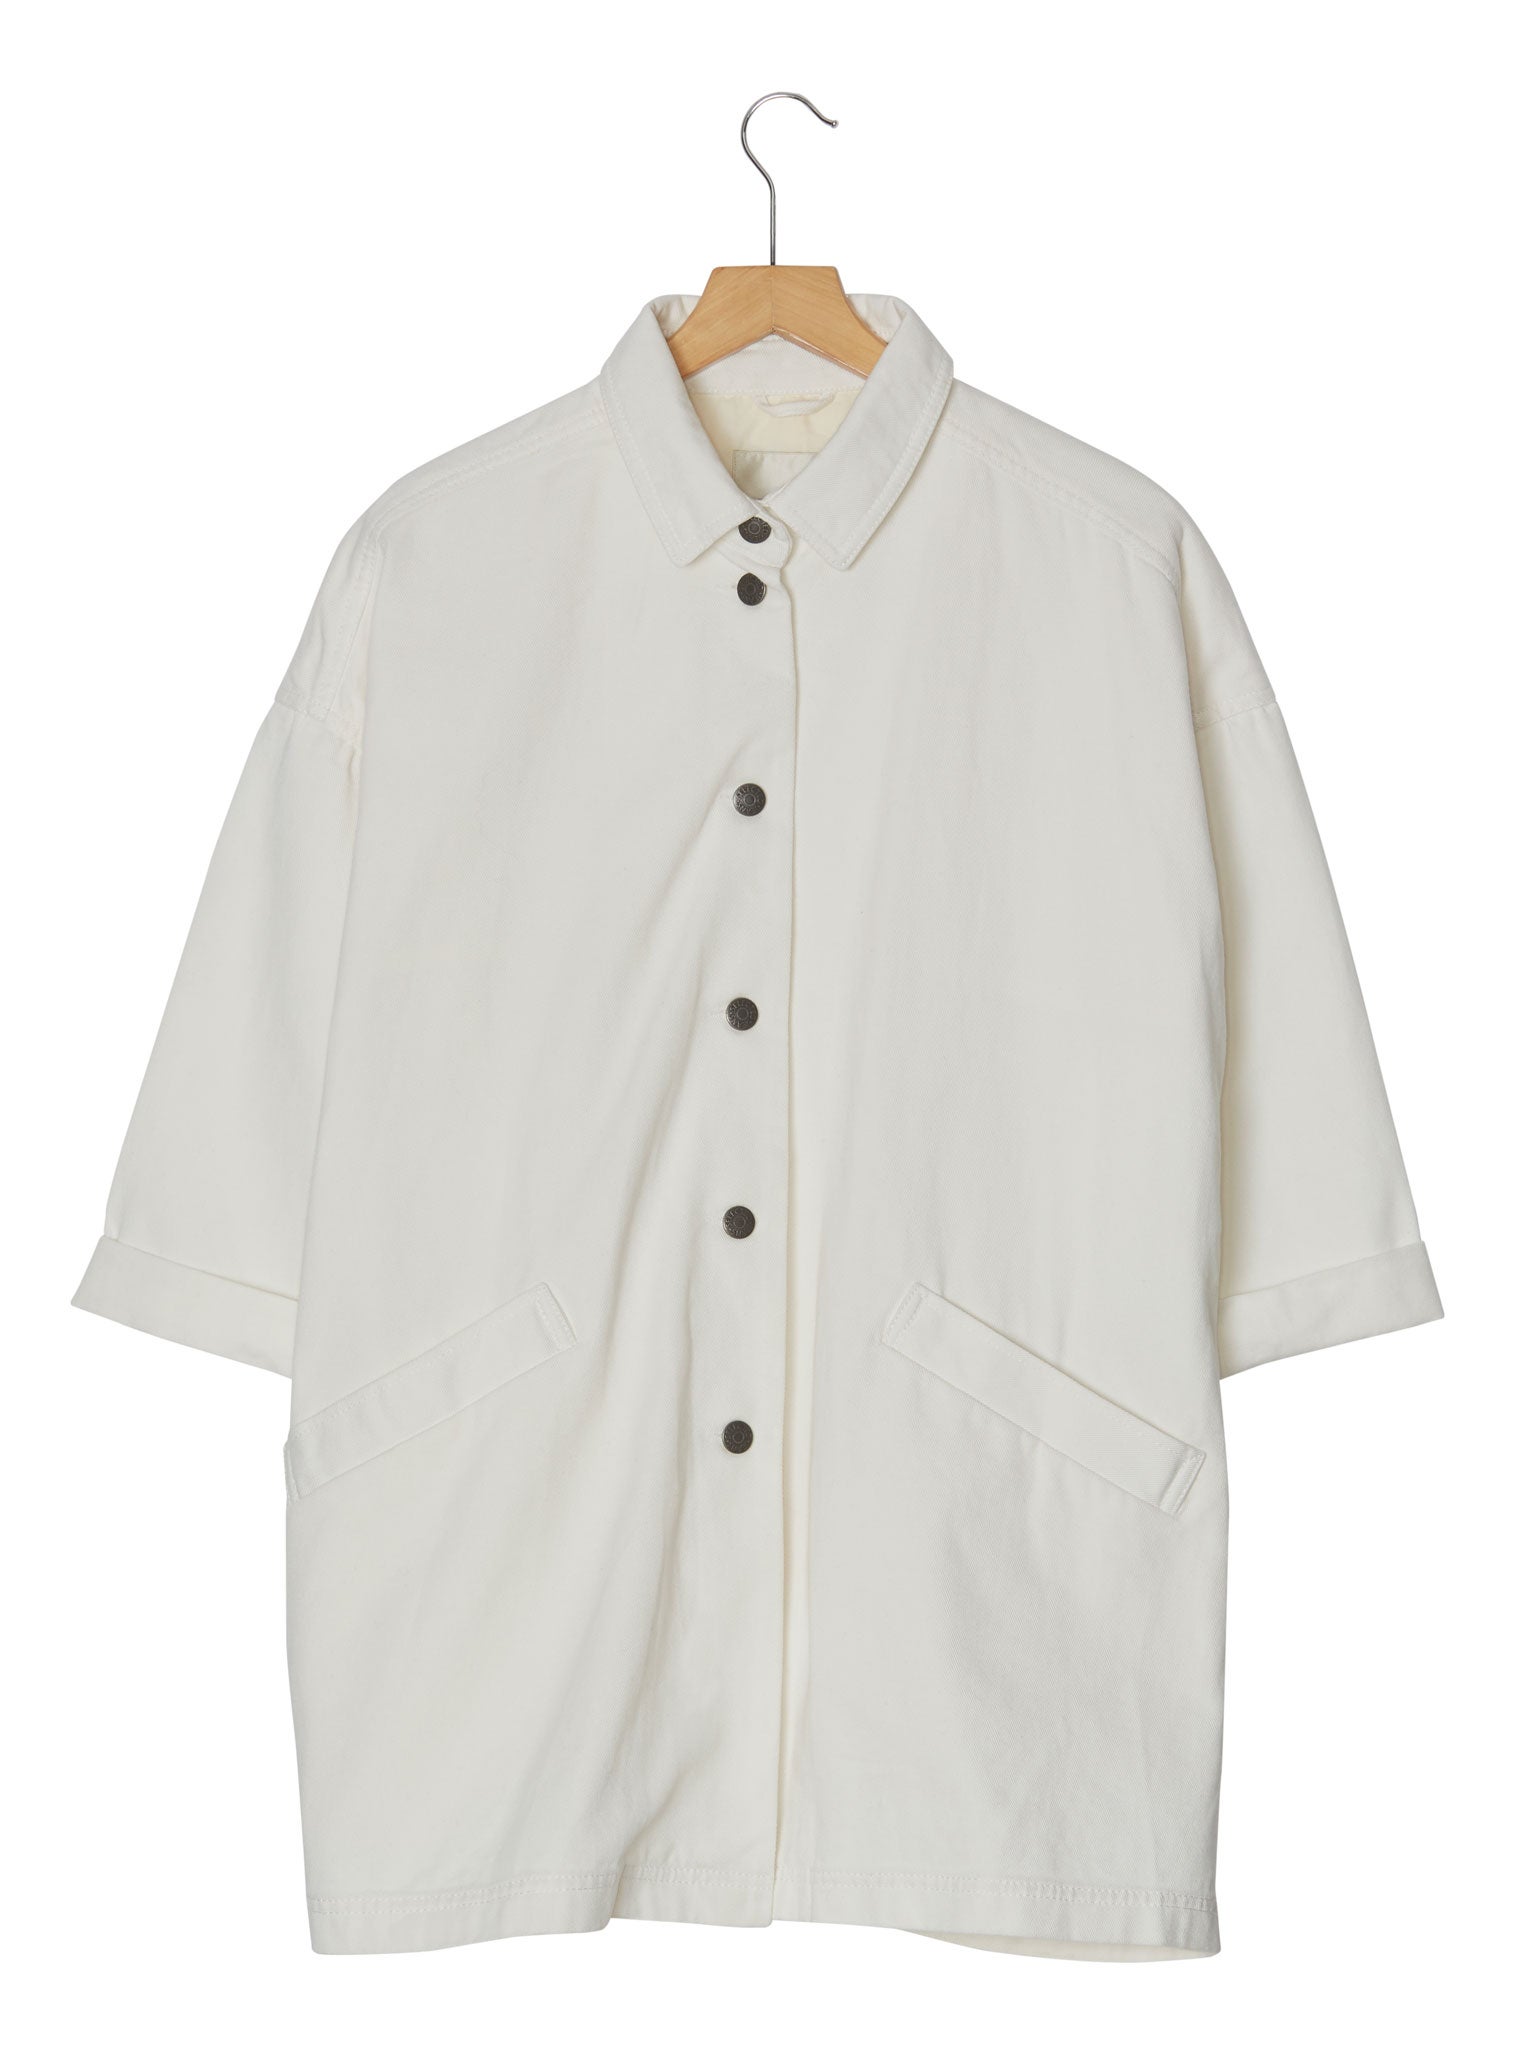 Workwear vibe: Off-white longline denim jacket, £85, plumo.com